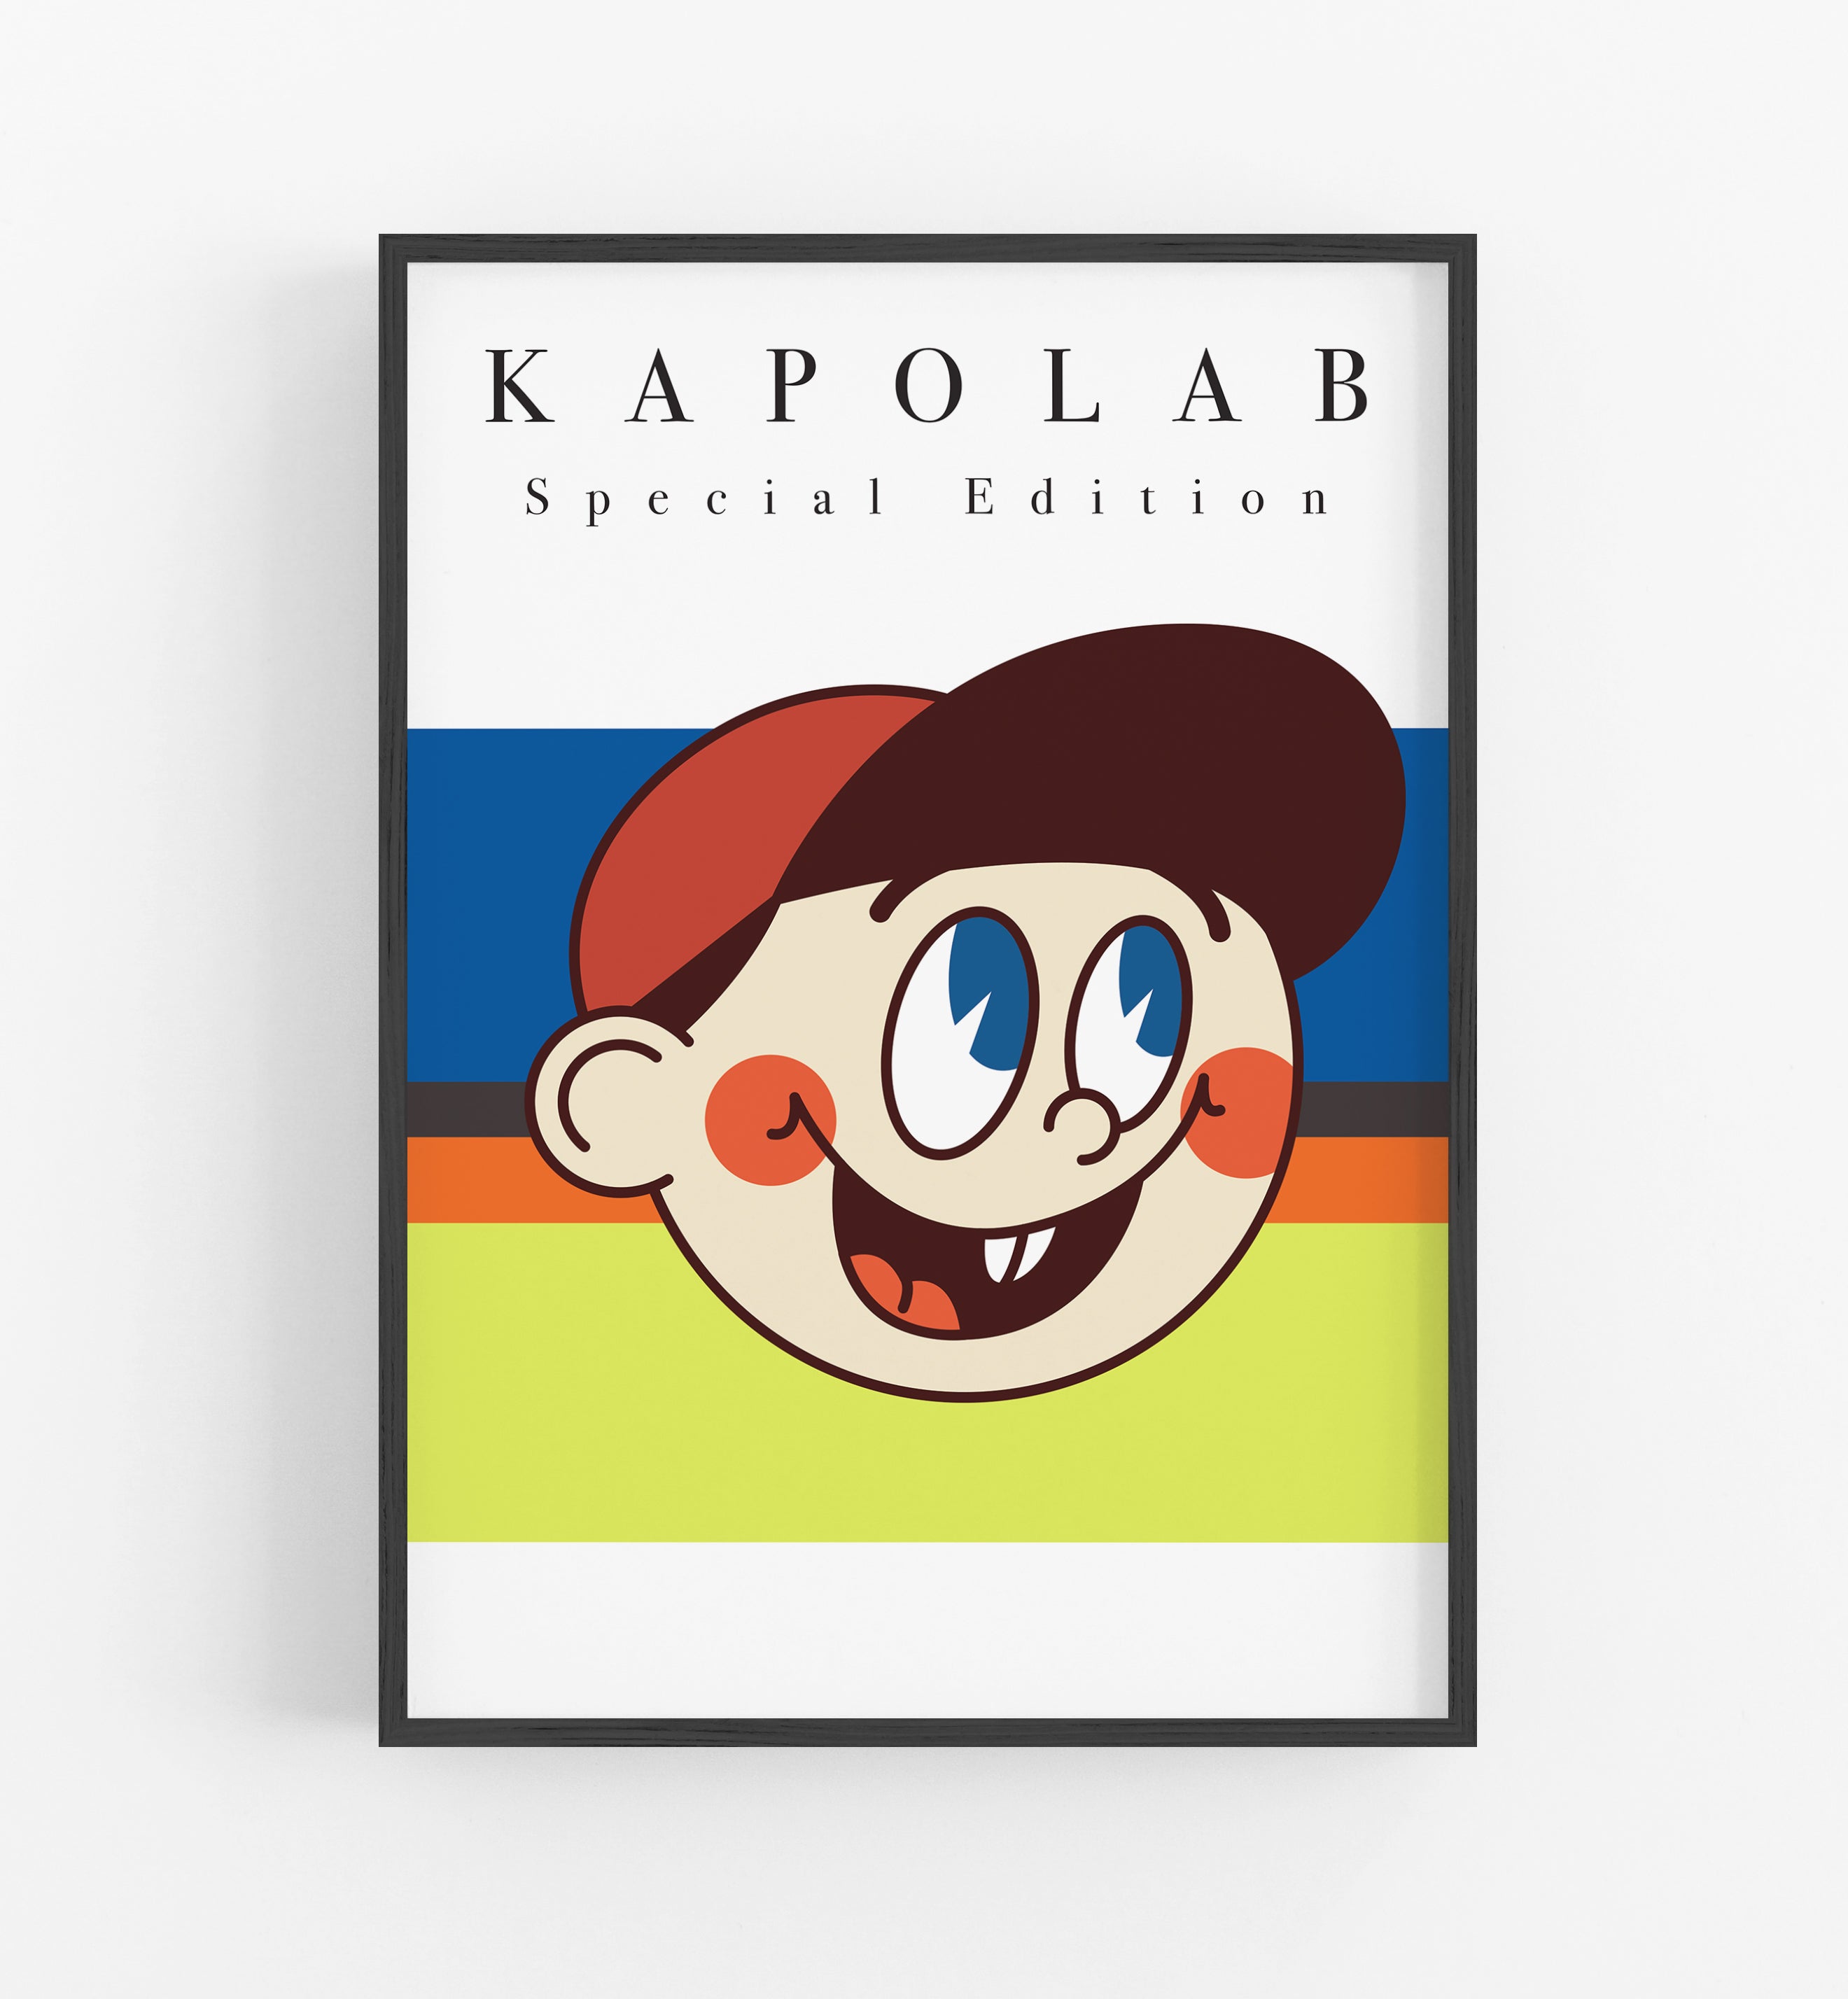 KapoLab Special Edition